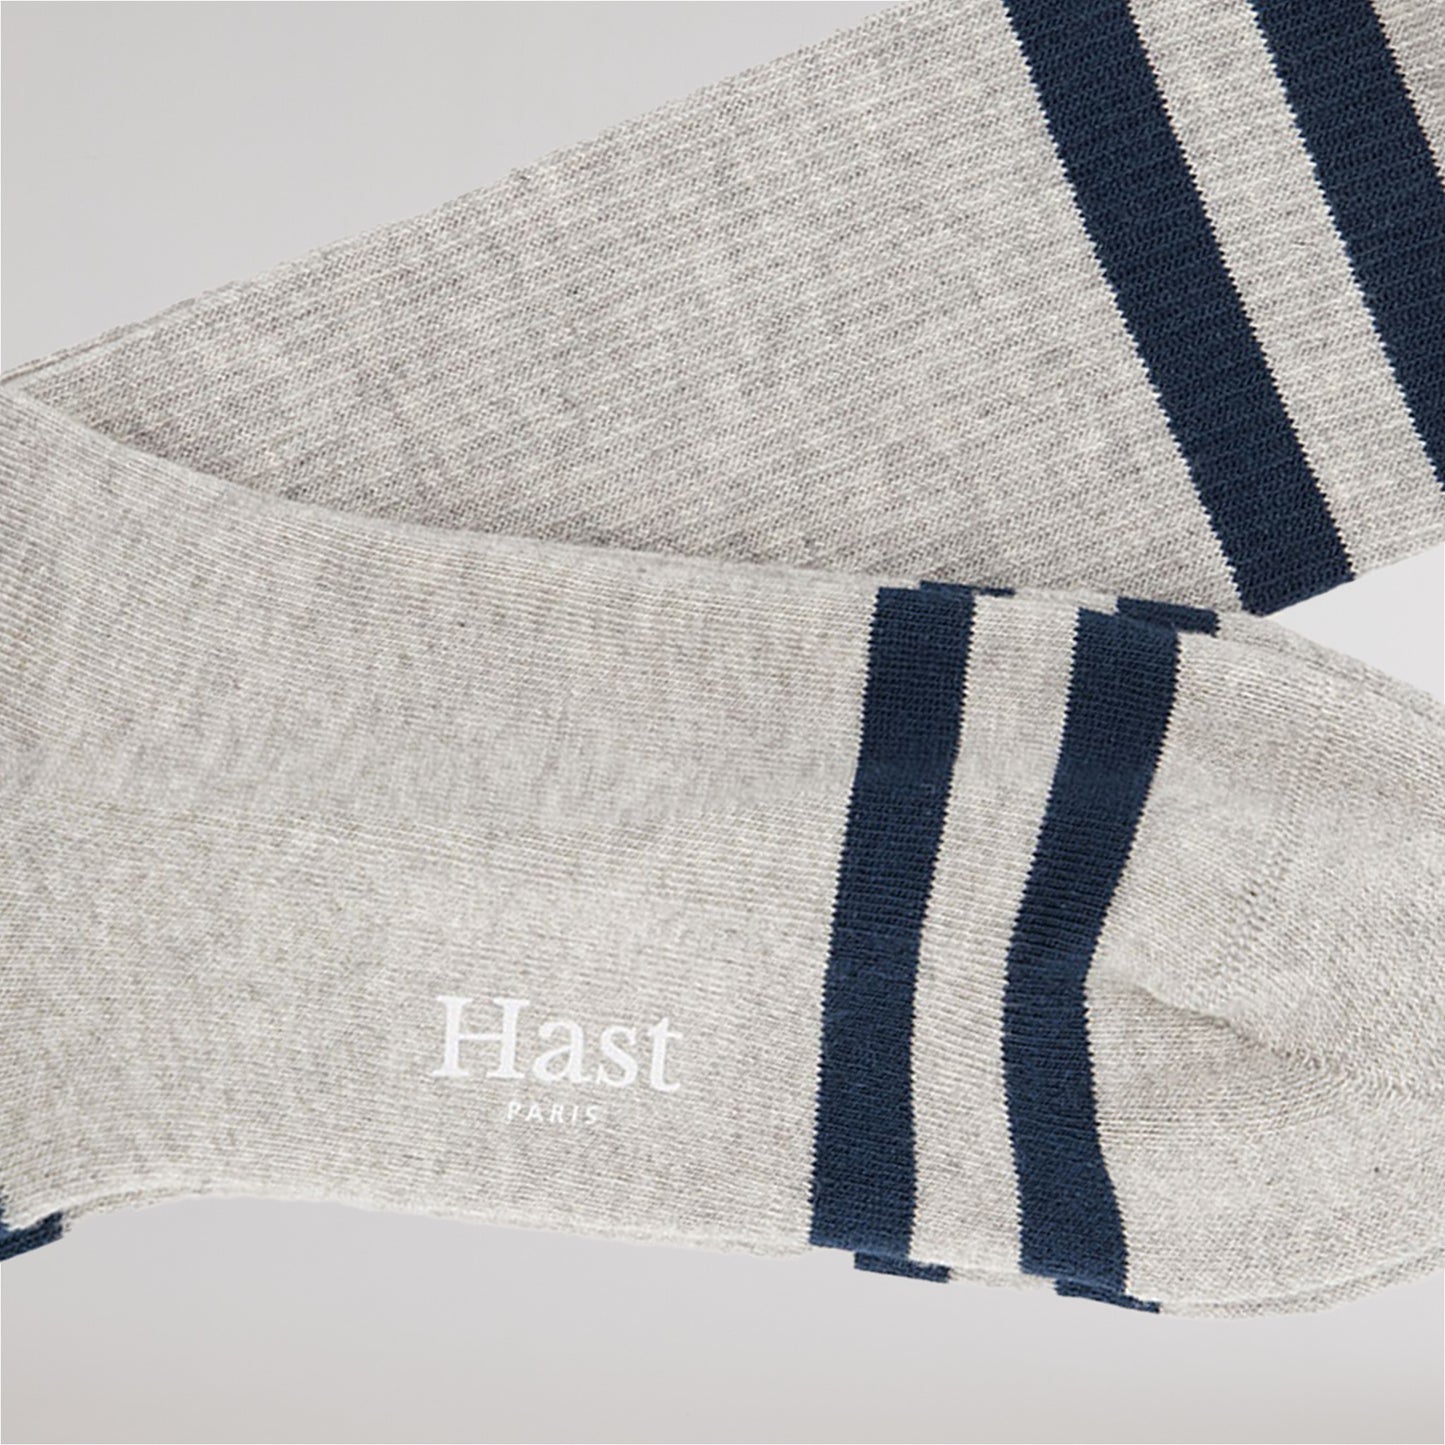 Gray and navy striped socks